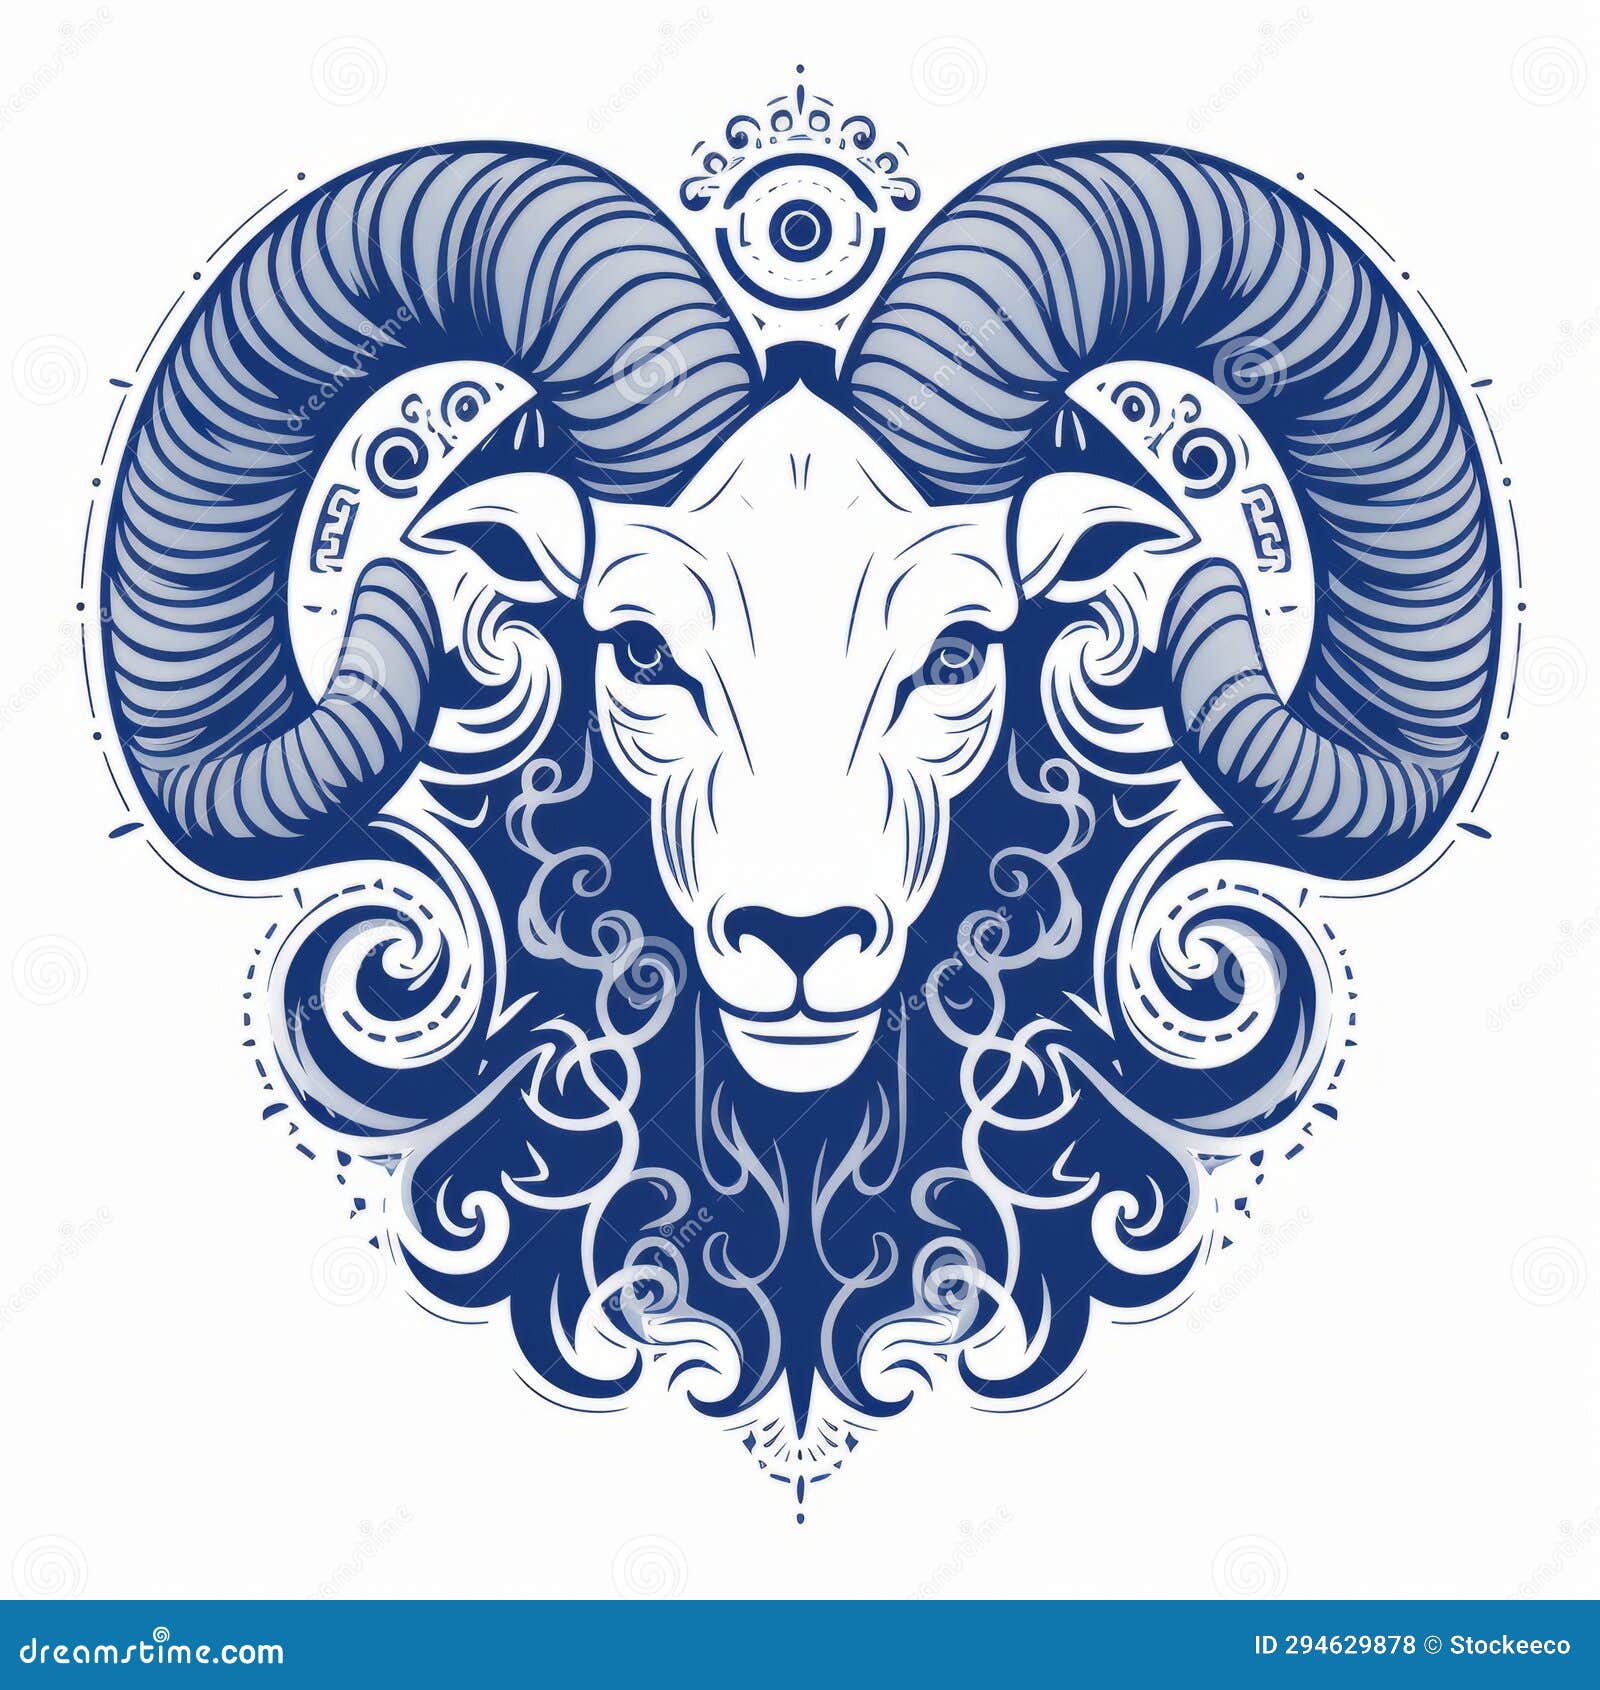 210+ Aries Tattoo Designs (2020) Ideas with Zodiac Symbol & Signs | Aries  tattoo, Ram tattoo, Aries ram tattoo